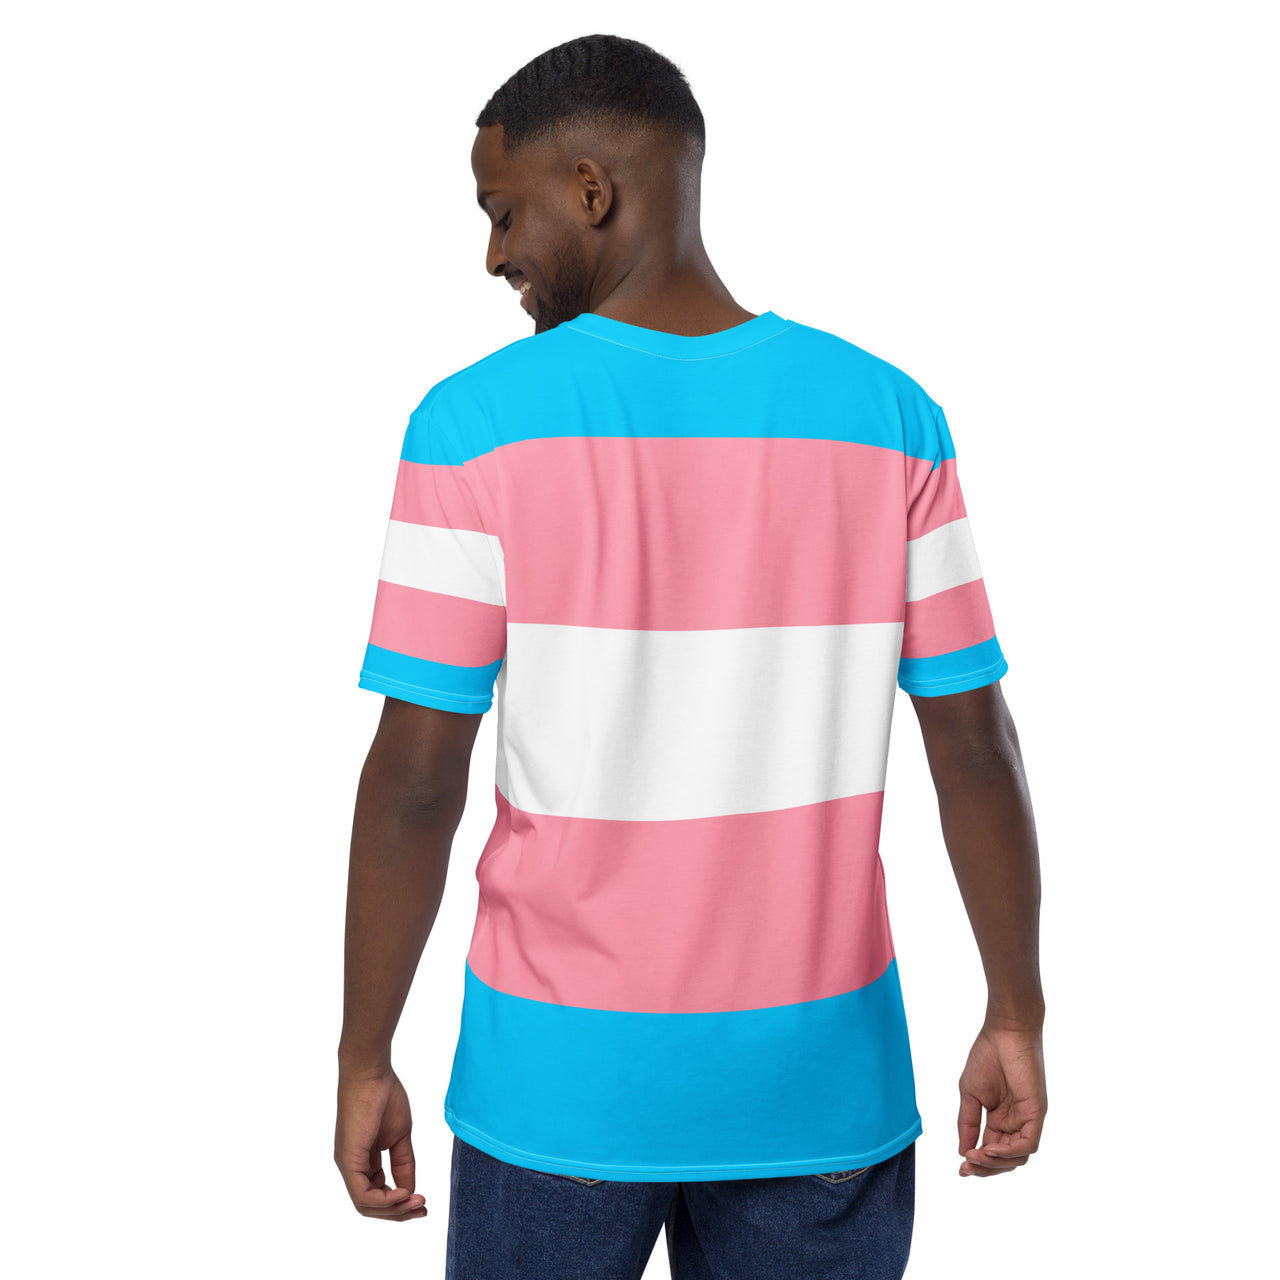 Transgender Flag LGBTQ T- Shirt Men's Size SHAVA